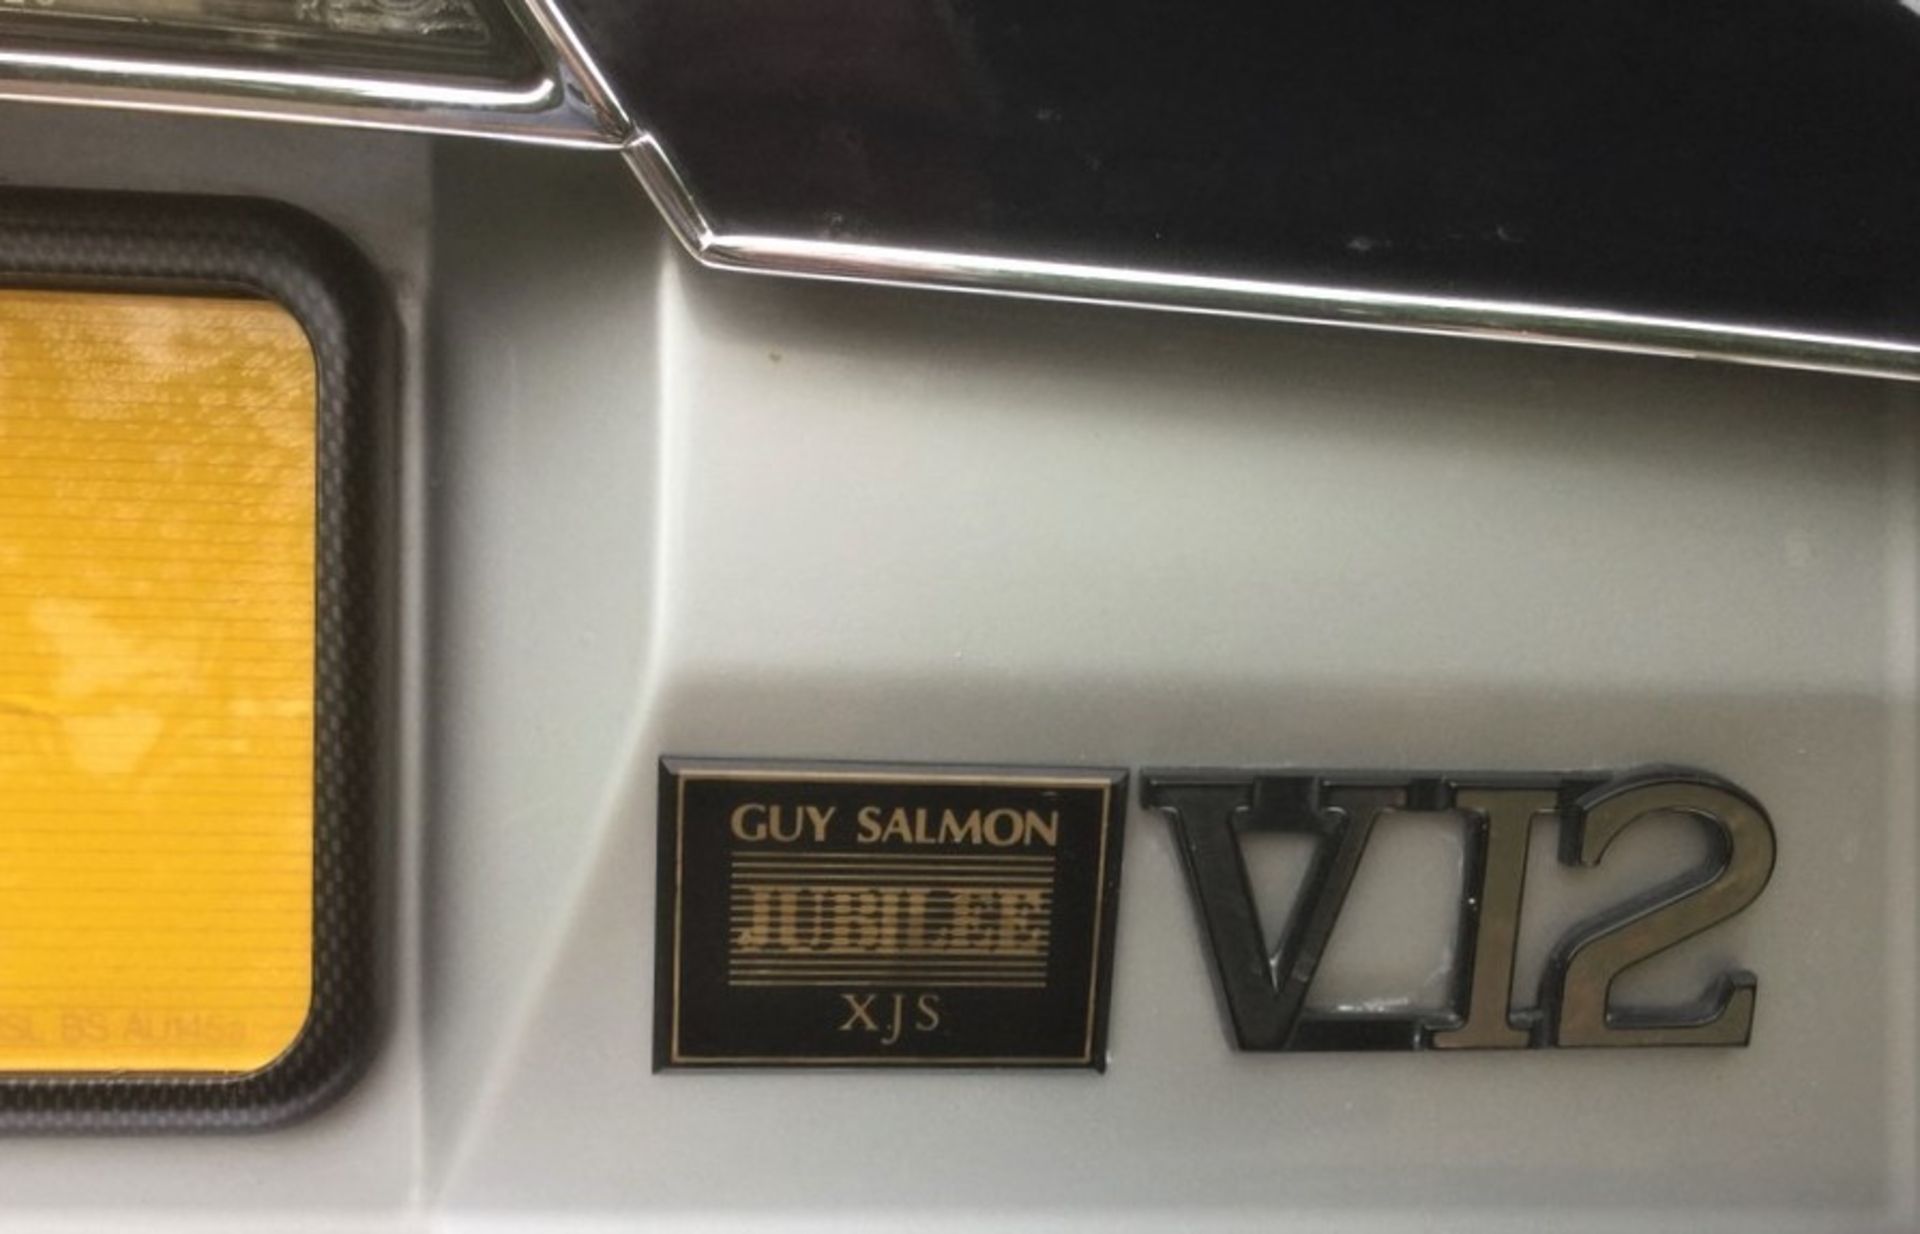 1987 JAGUAR XJS - GUY SALMON JUBILEE EDITION Registration Number: SIJ 149 Chassis Number: - Image 11 of 13